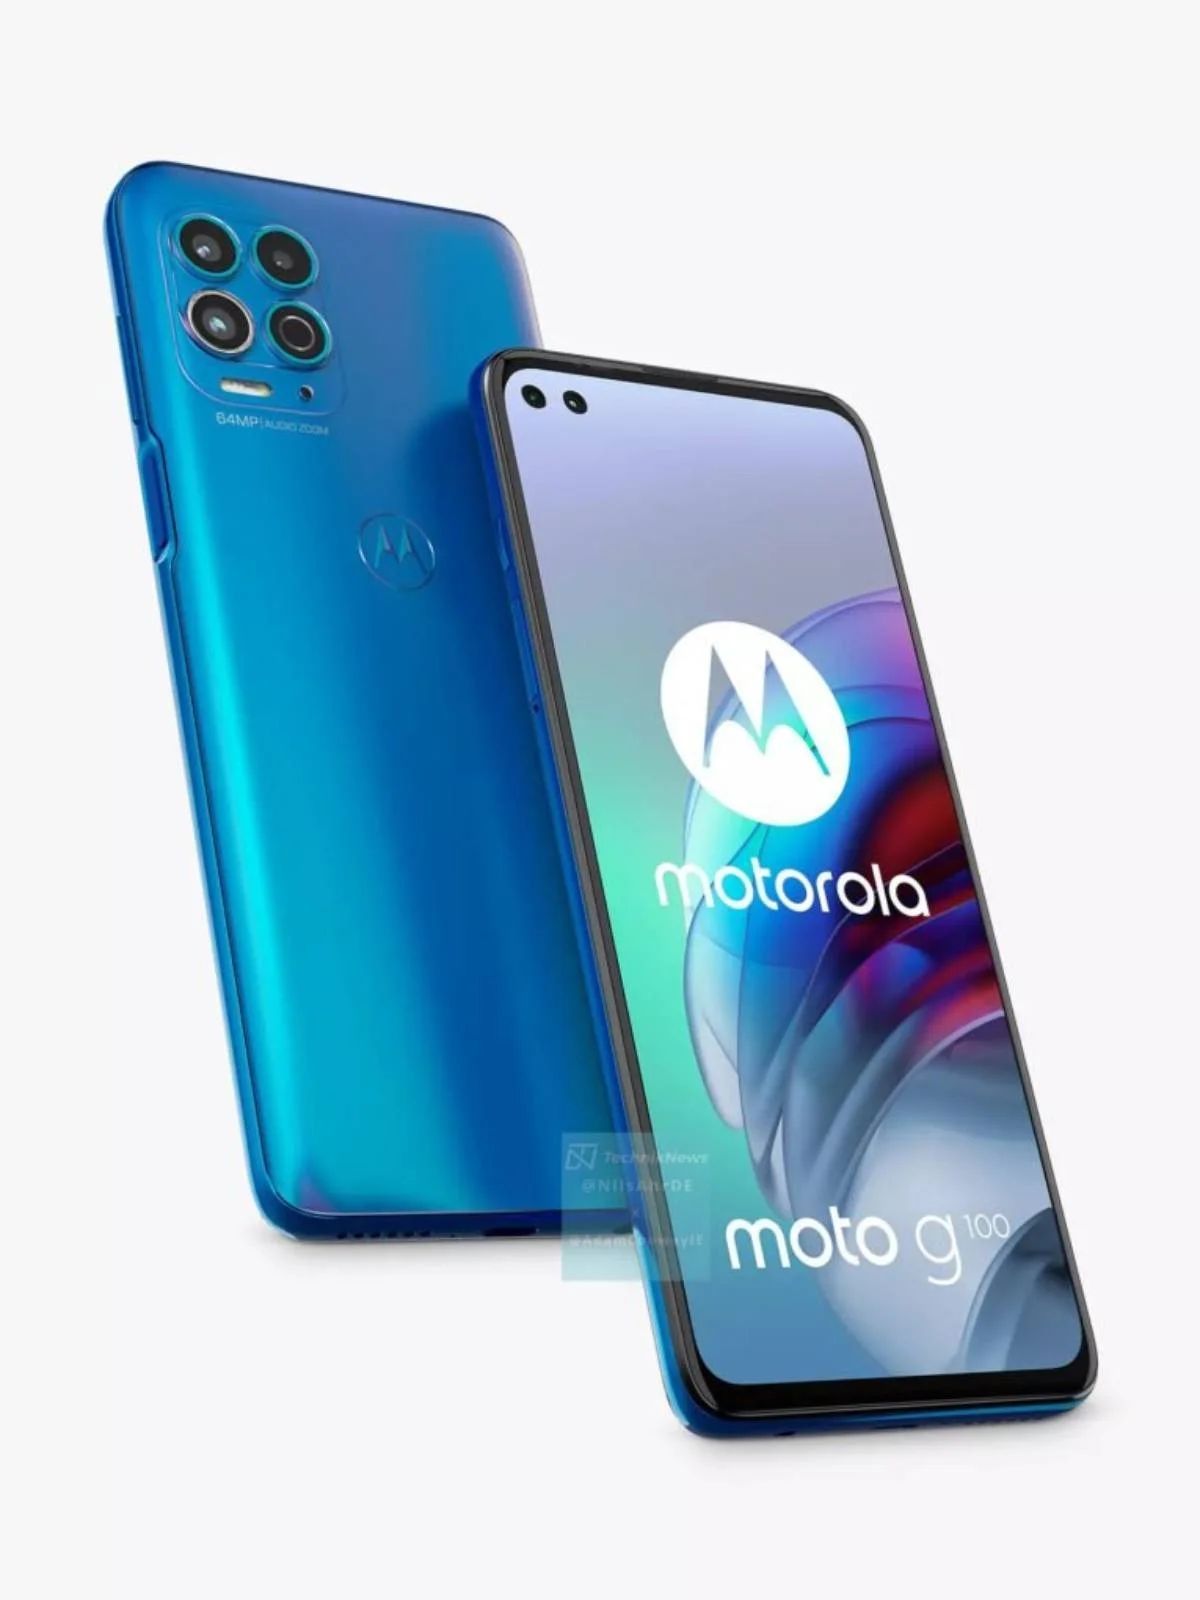 Motorola Moto G100 vaza na íntegra, um Motorola Edge S para a Europa